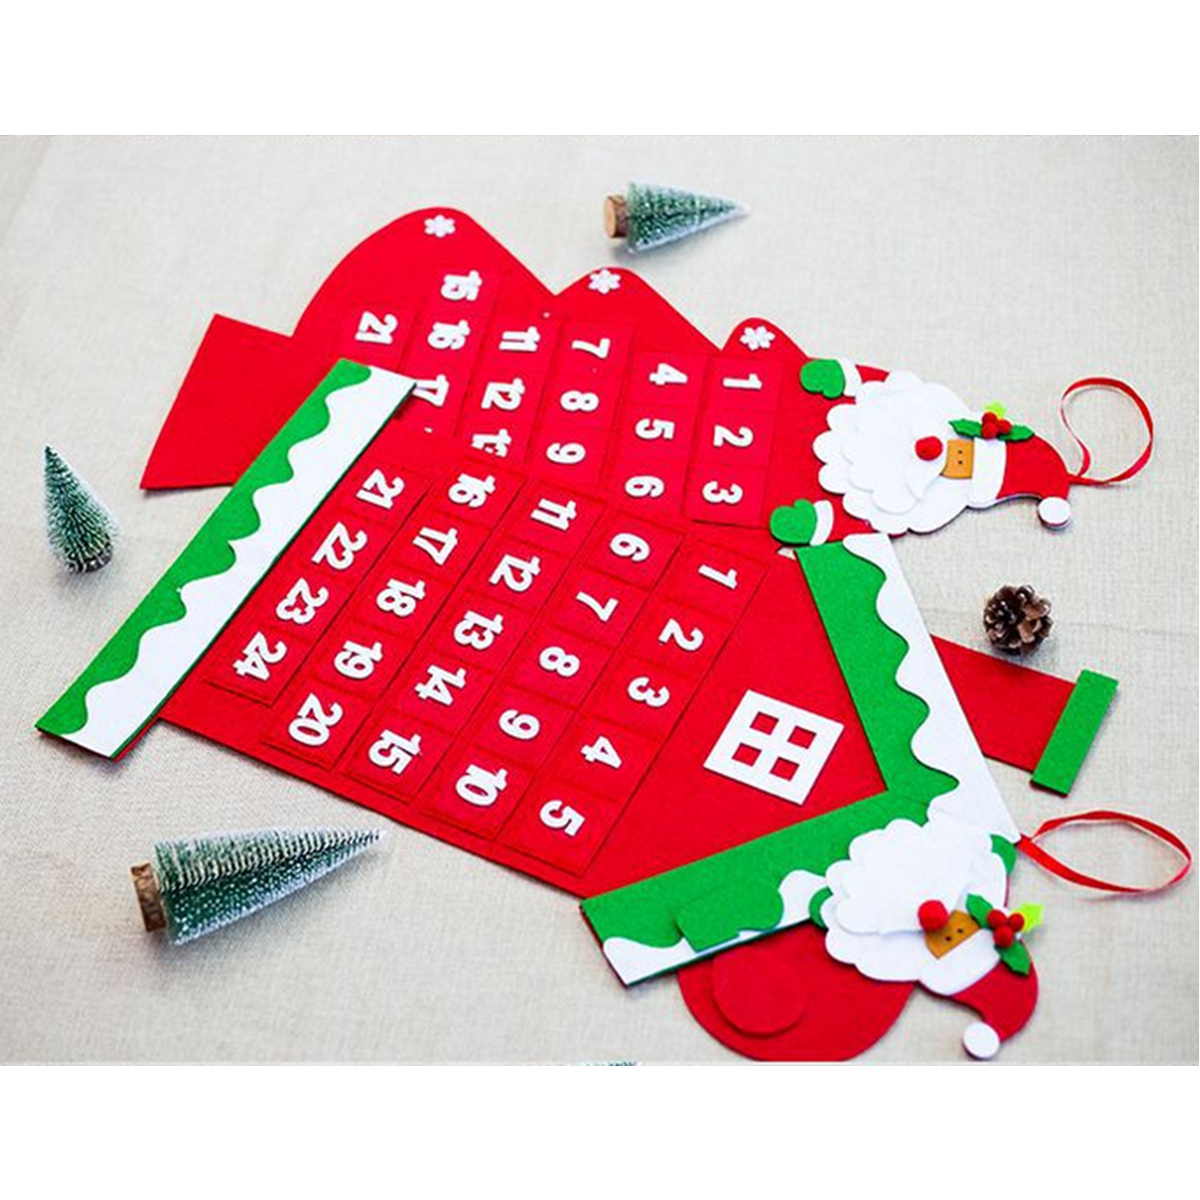 Christmas-Tree-Advent-Calendar-Felt-Fabric-Holiday-Countdown-Christmas-Display-Decor-1370488-7